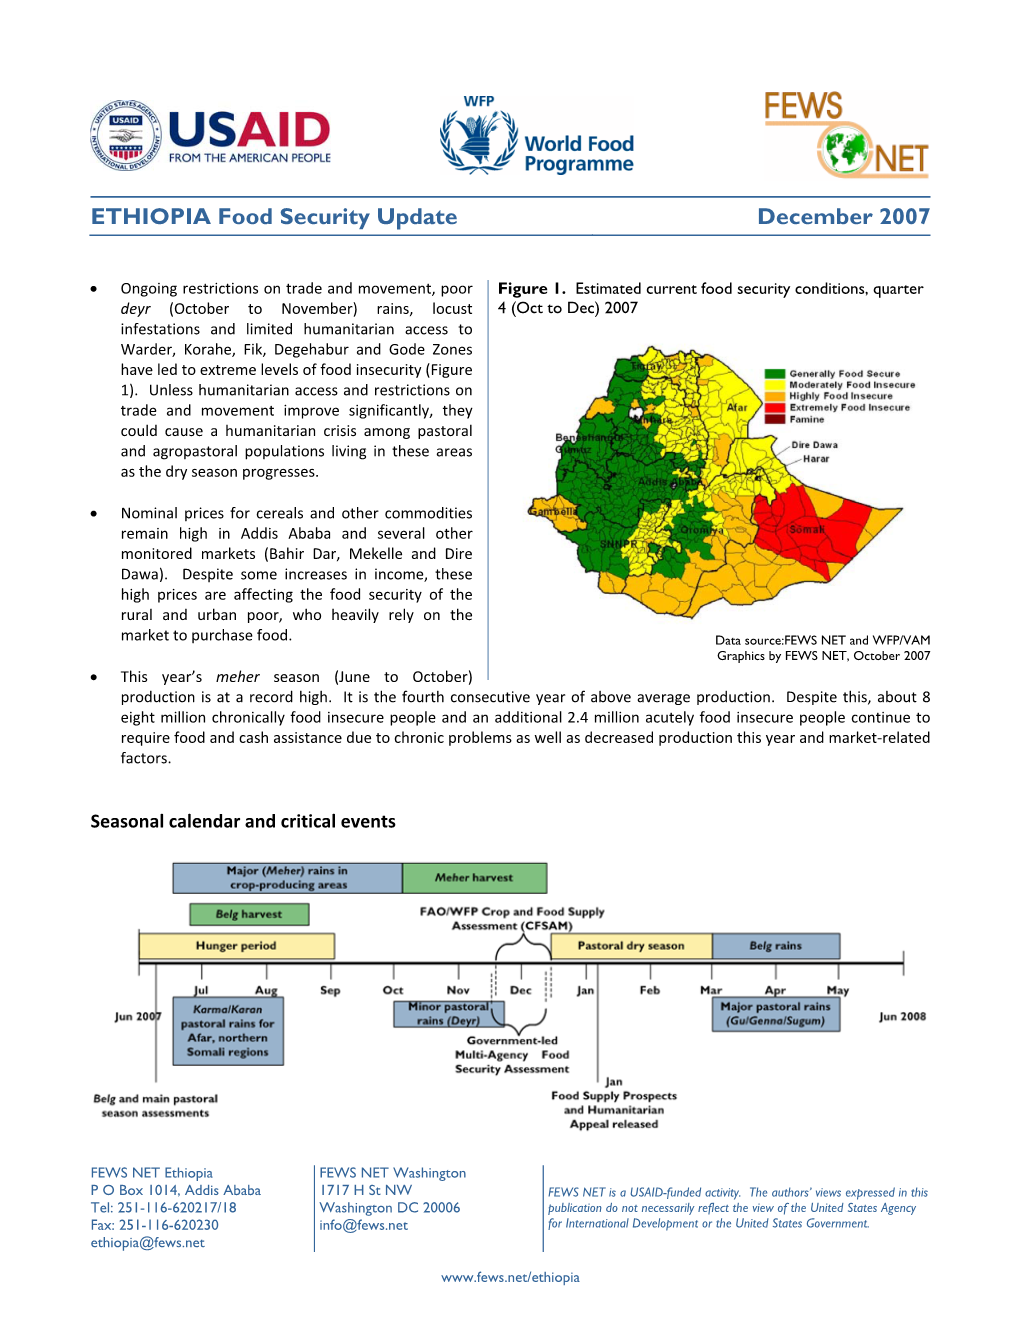 Ethiopia Food Security Update, December 2007